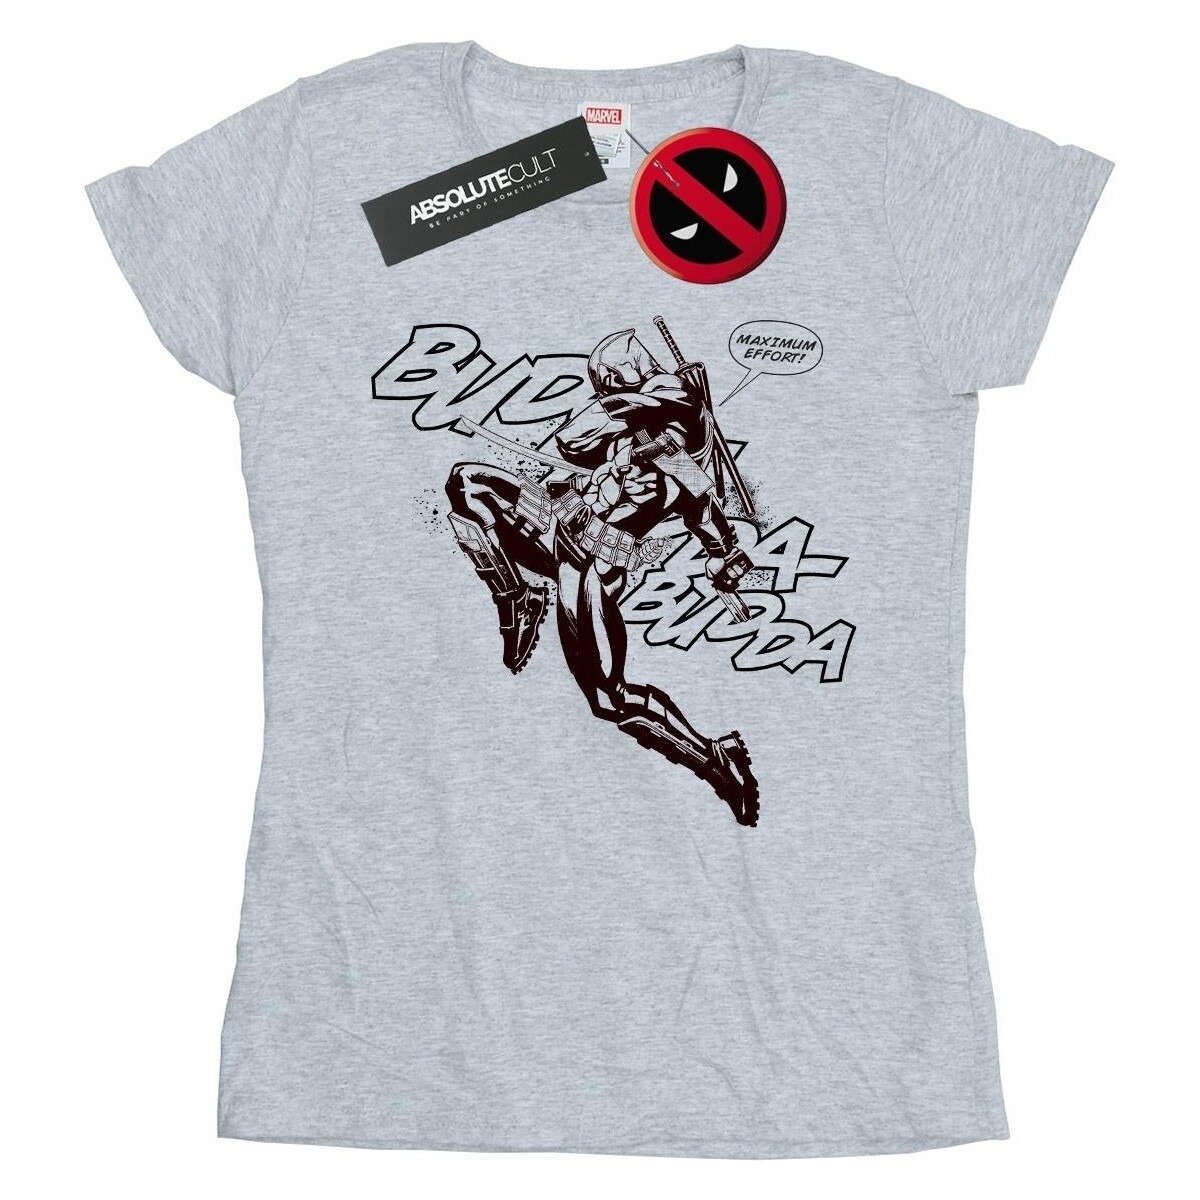 Vêtements Femme T-shirts manches longues Marvel Deadpool Budda Budda Gris